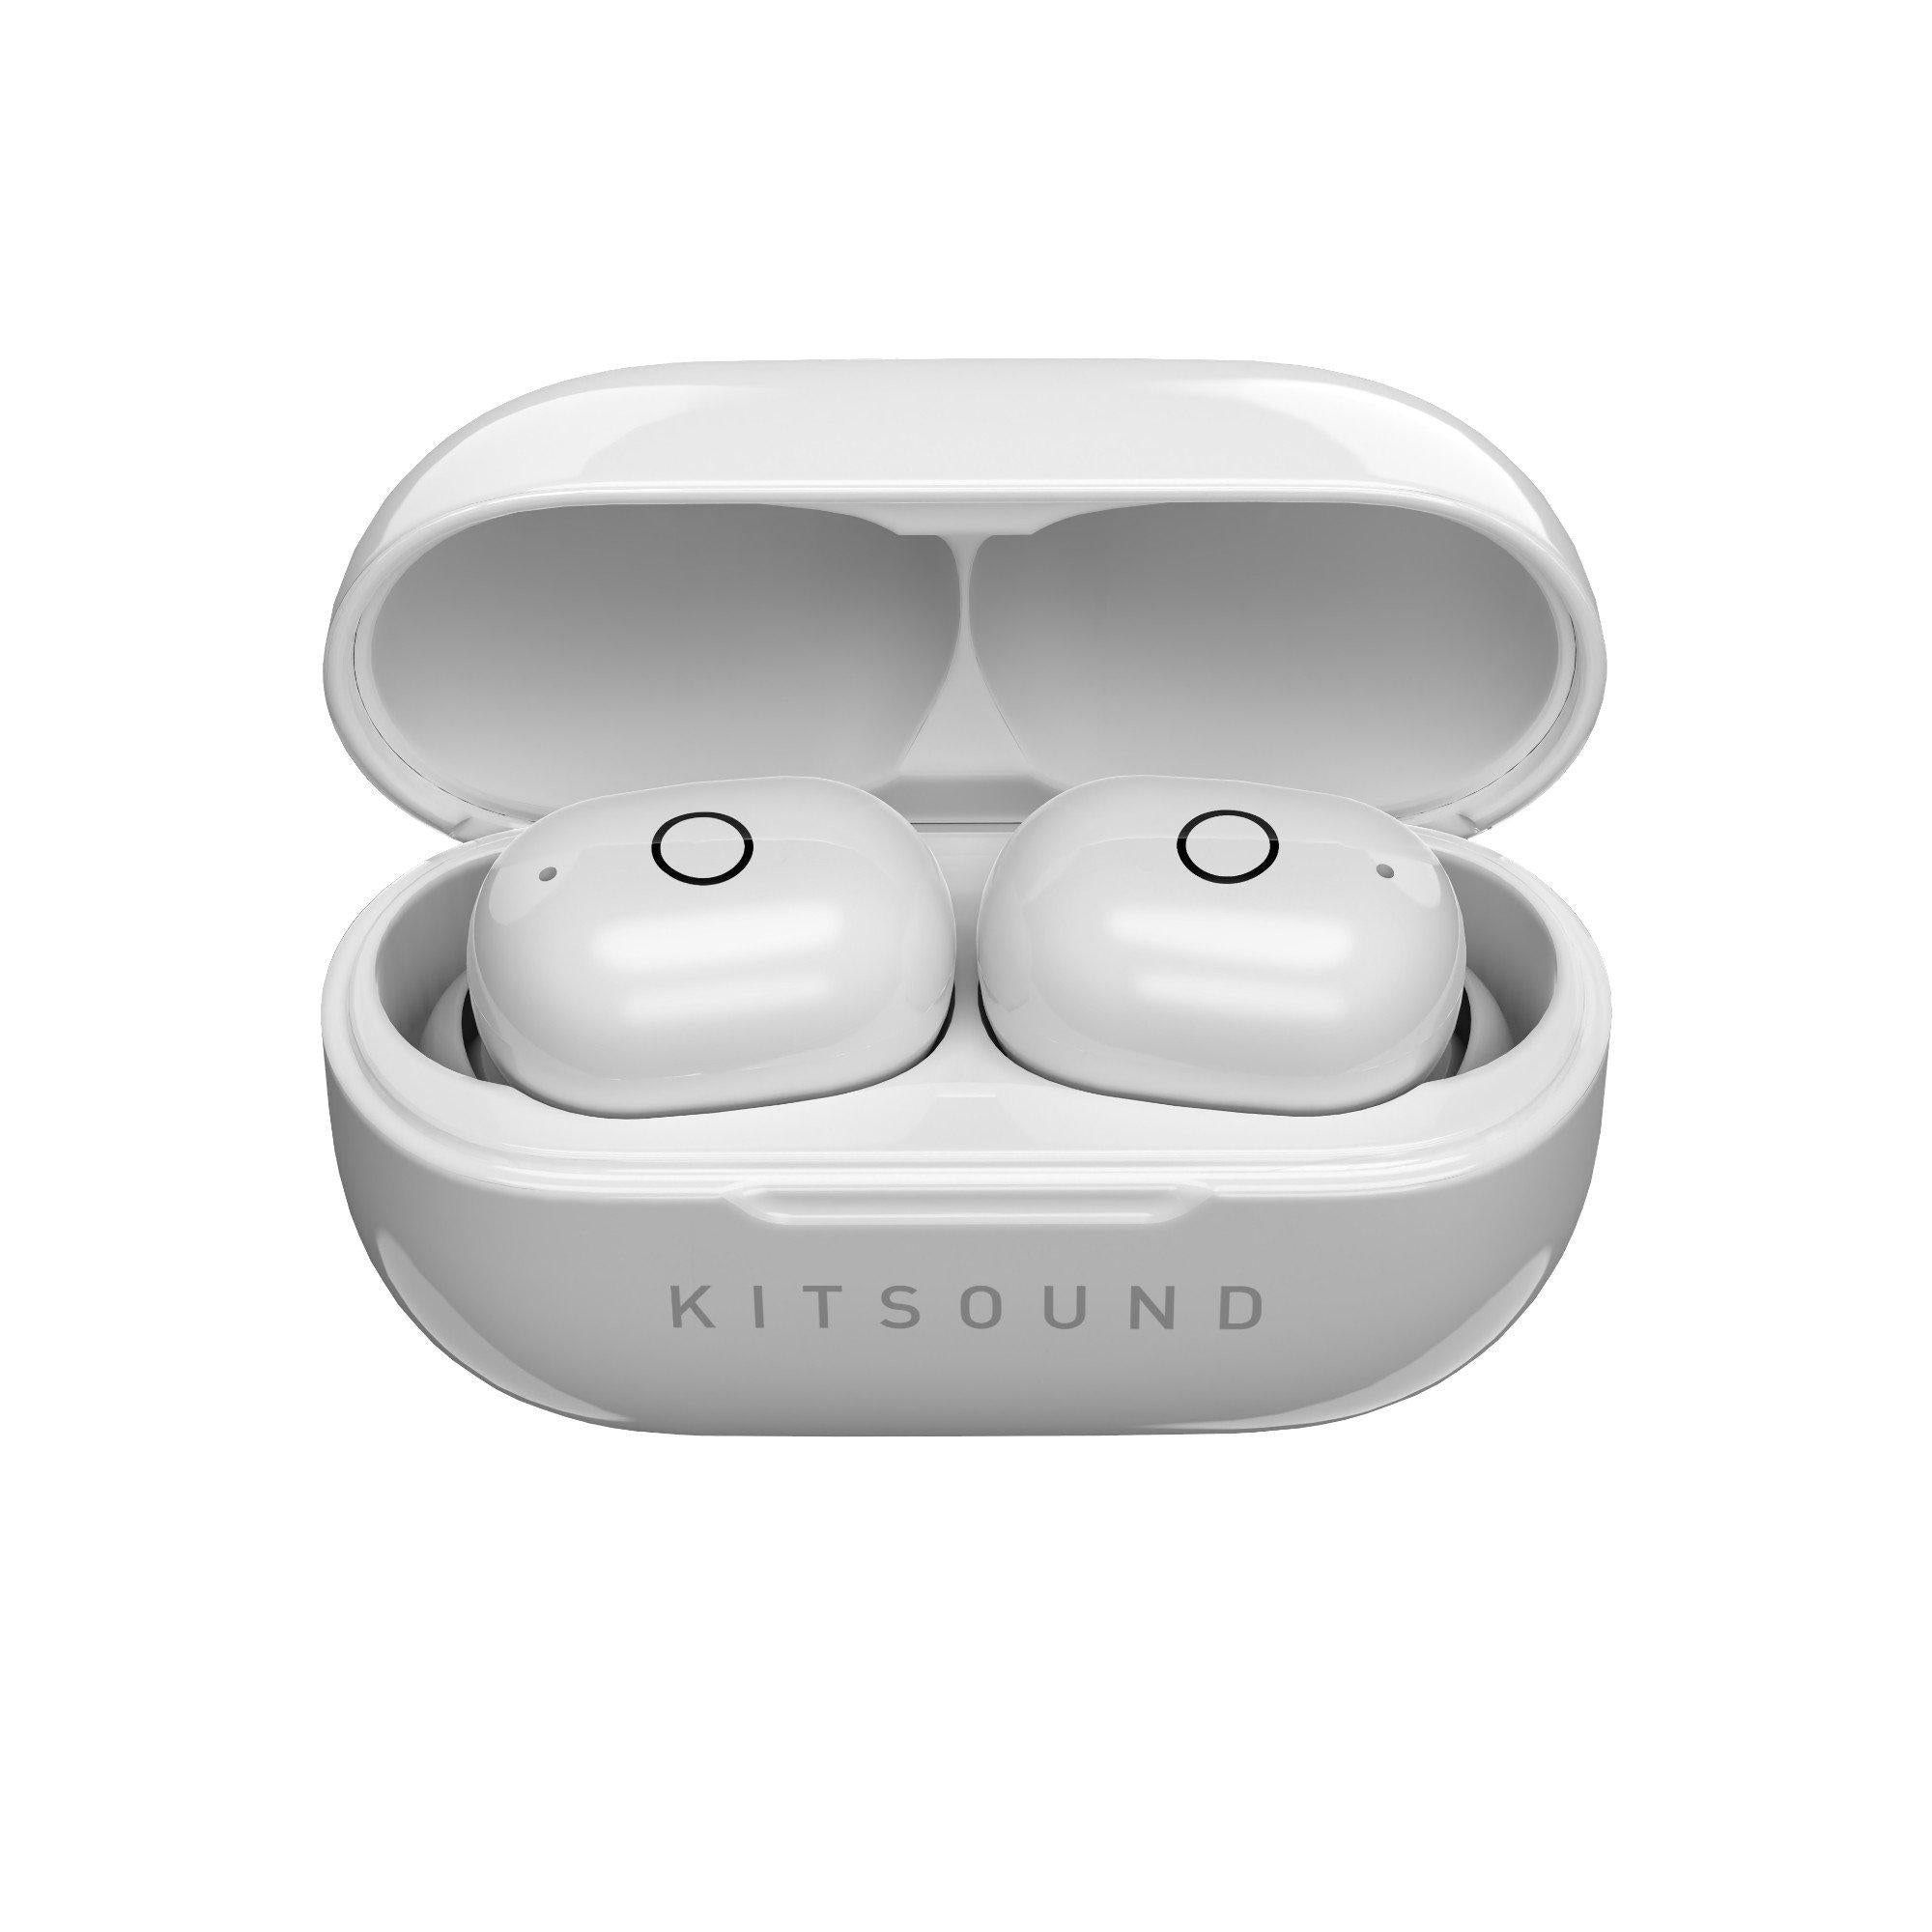 KitSound Edge 20 True Wireless Bluetooth Earbuds - White - Refurbished Pristine